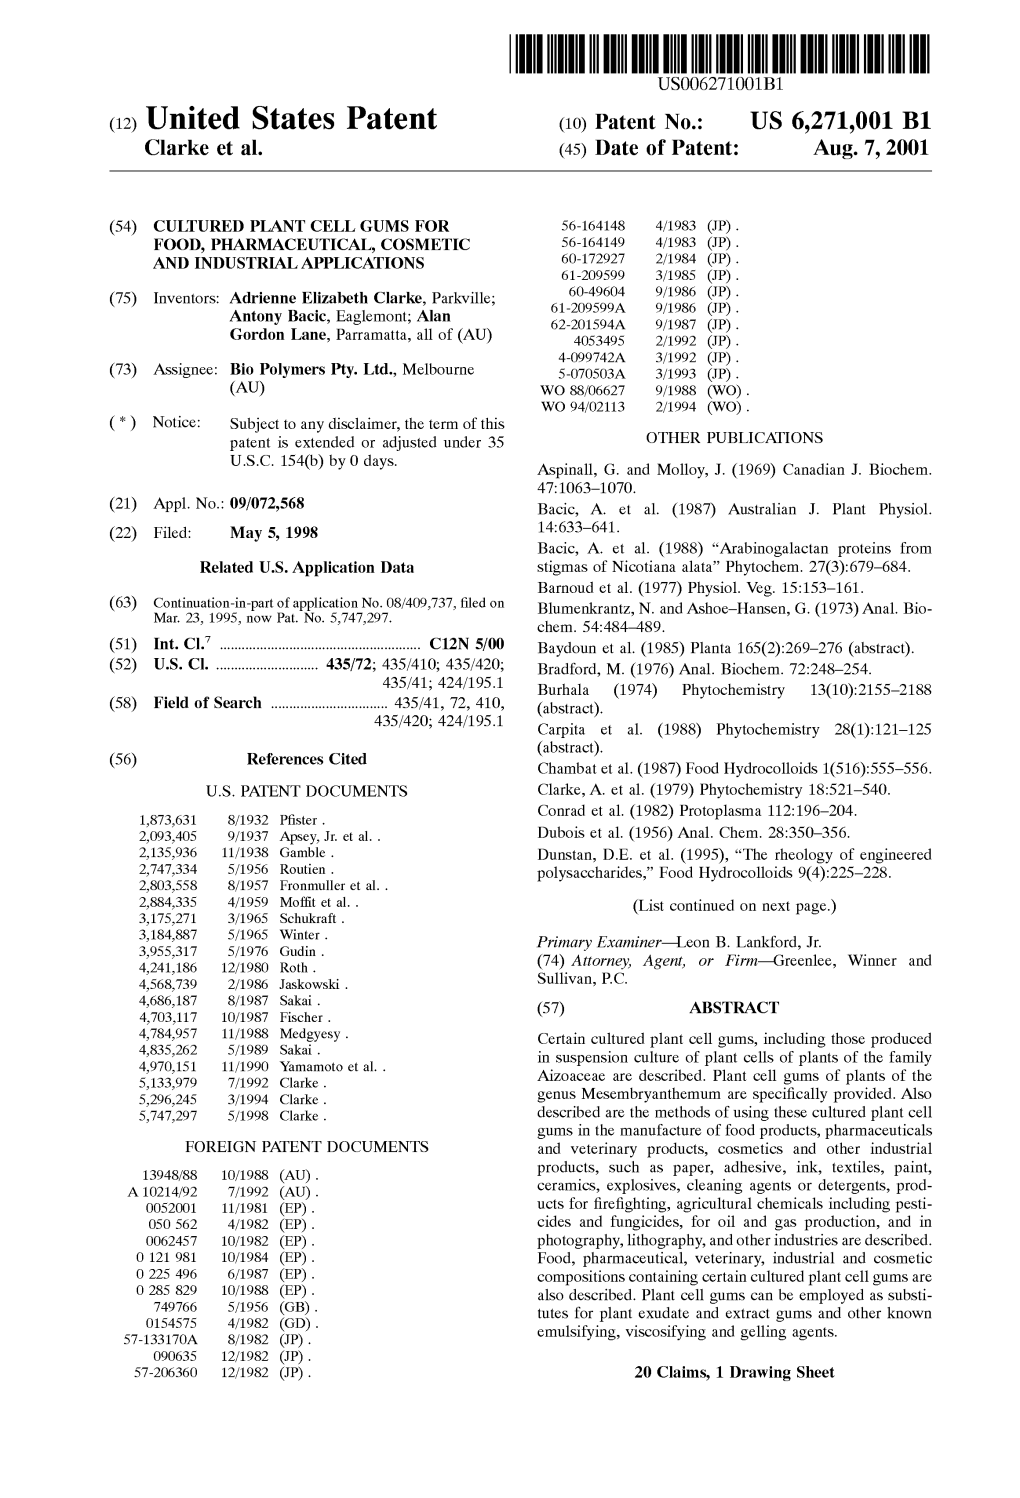 (12) United States Patent (10) Patent No.: US 6,271,001 B1 Clarke Et Al